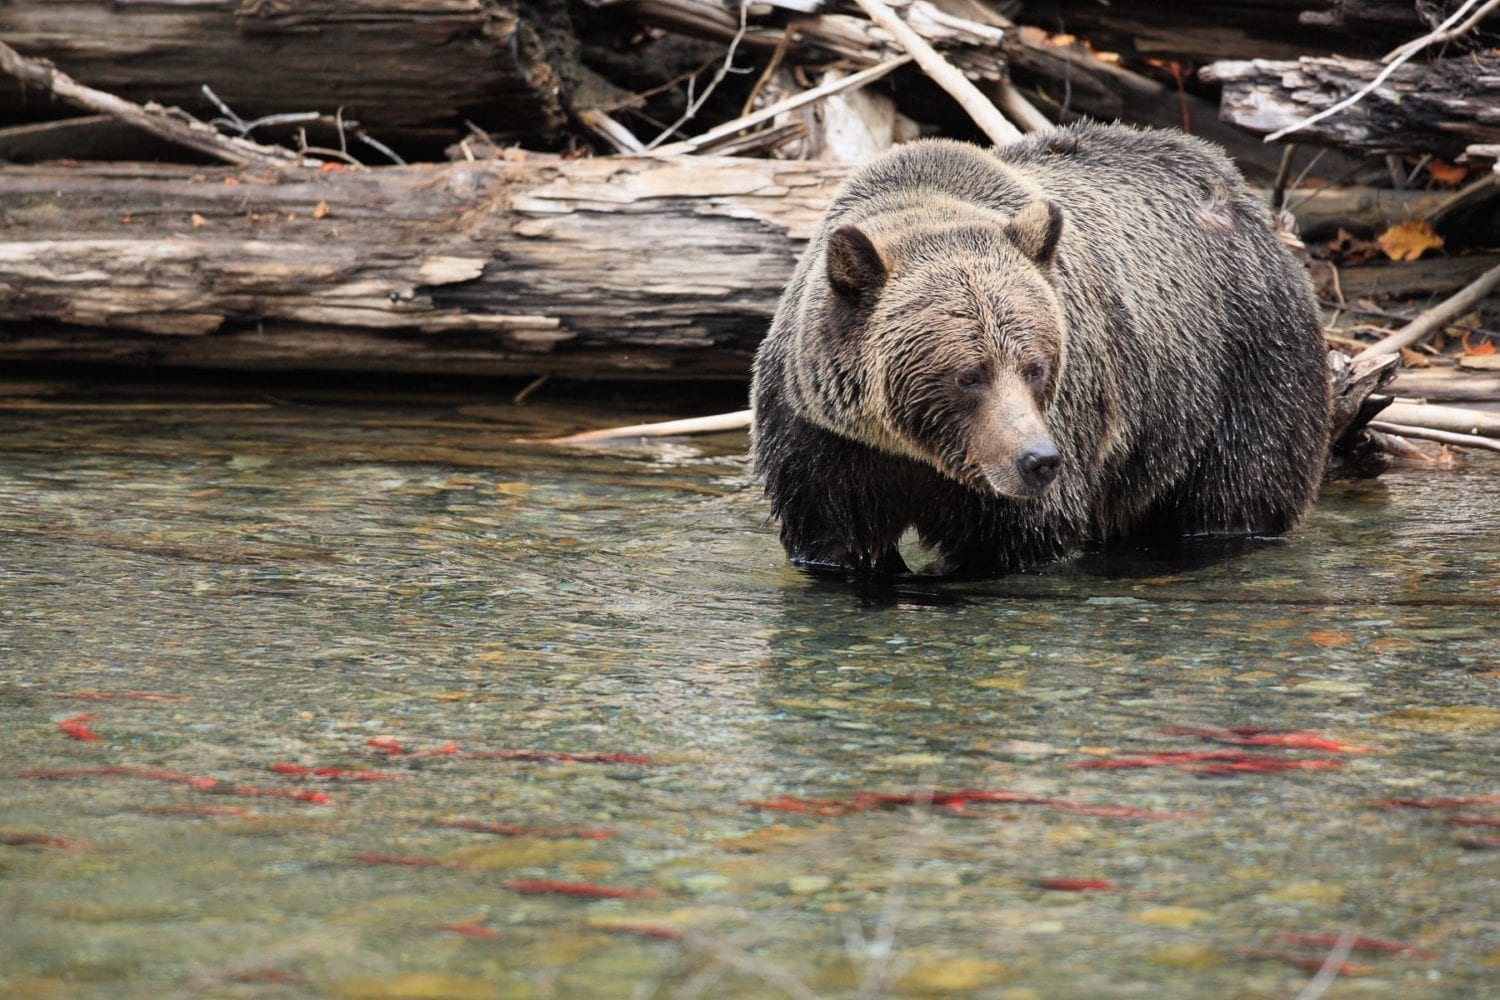 A grizzly bear choosing a fish at Wild Bear Lodge